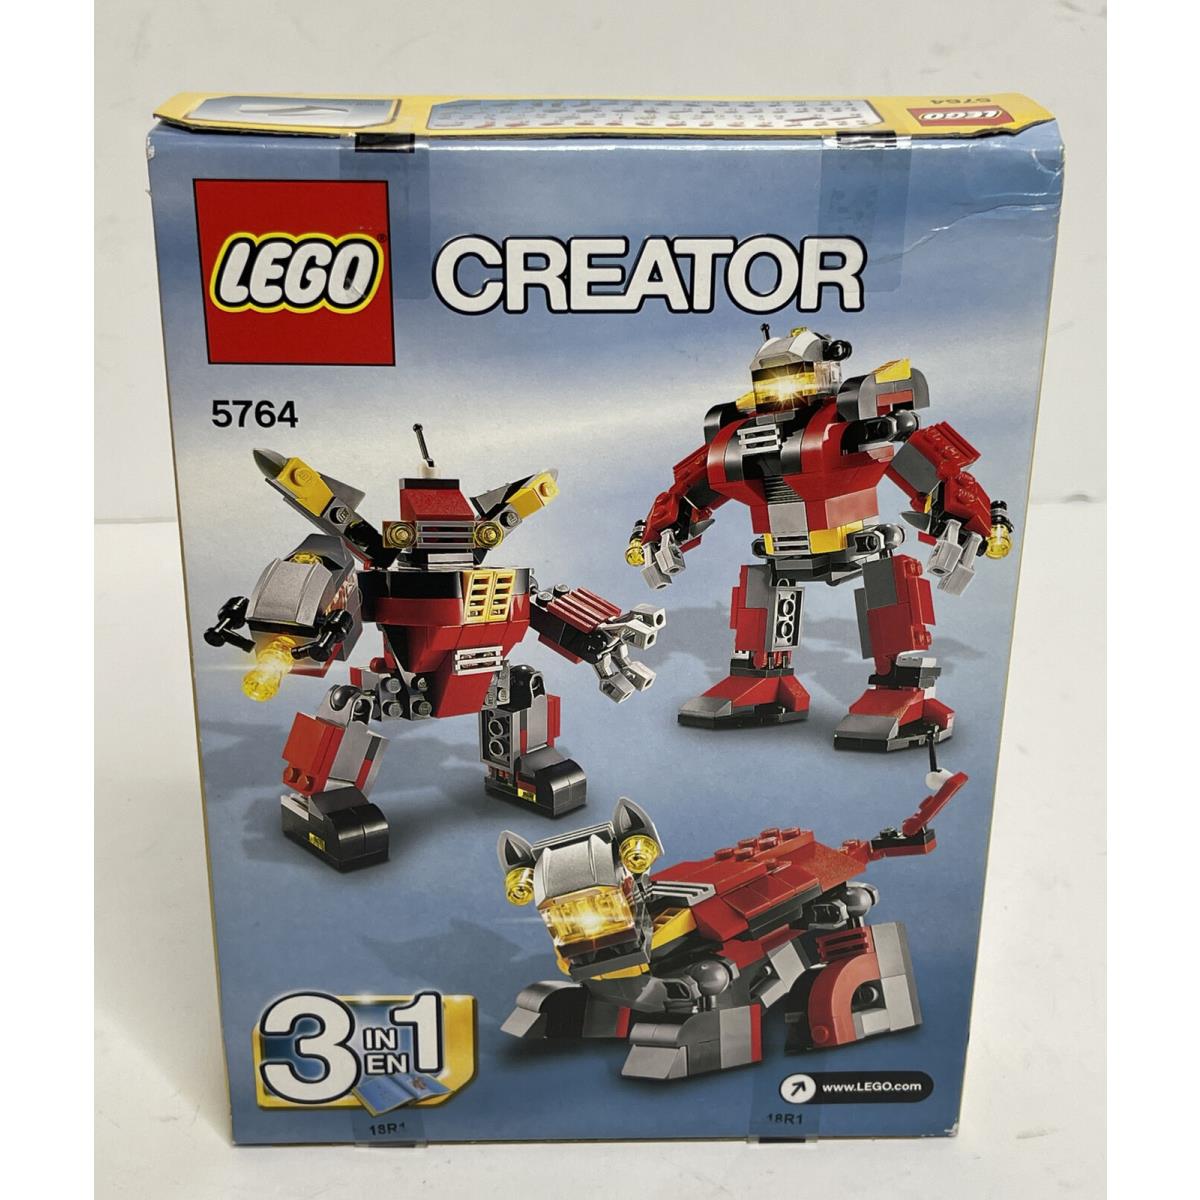 Lego Creator 5764 Rescue Robot with Light Brick